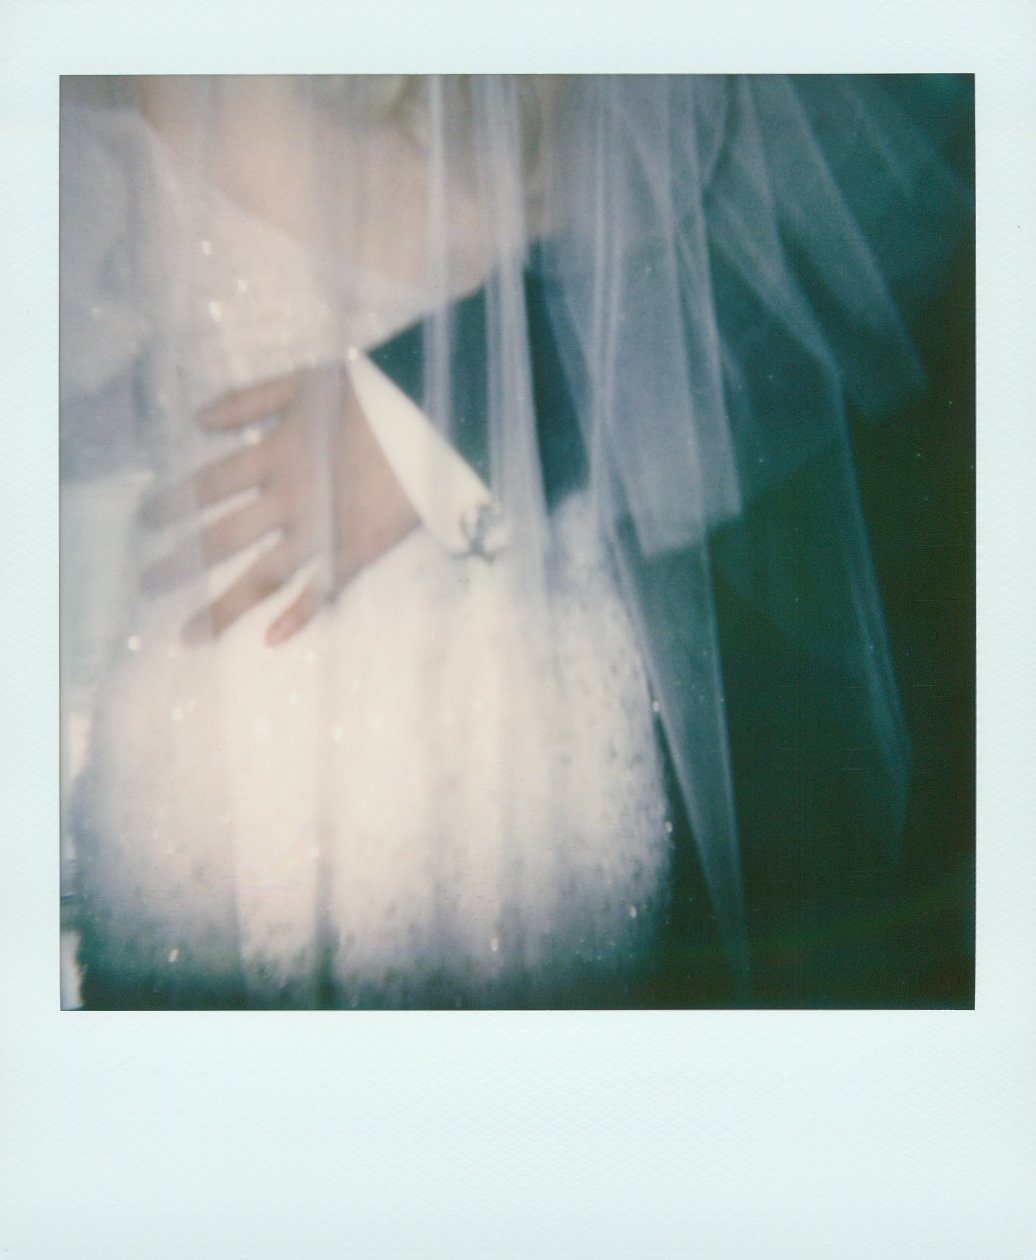 Wedding-taken-on-polaroids14.jpg